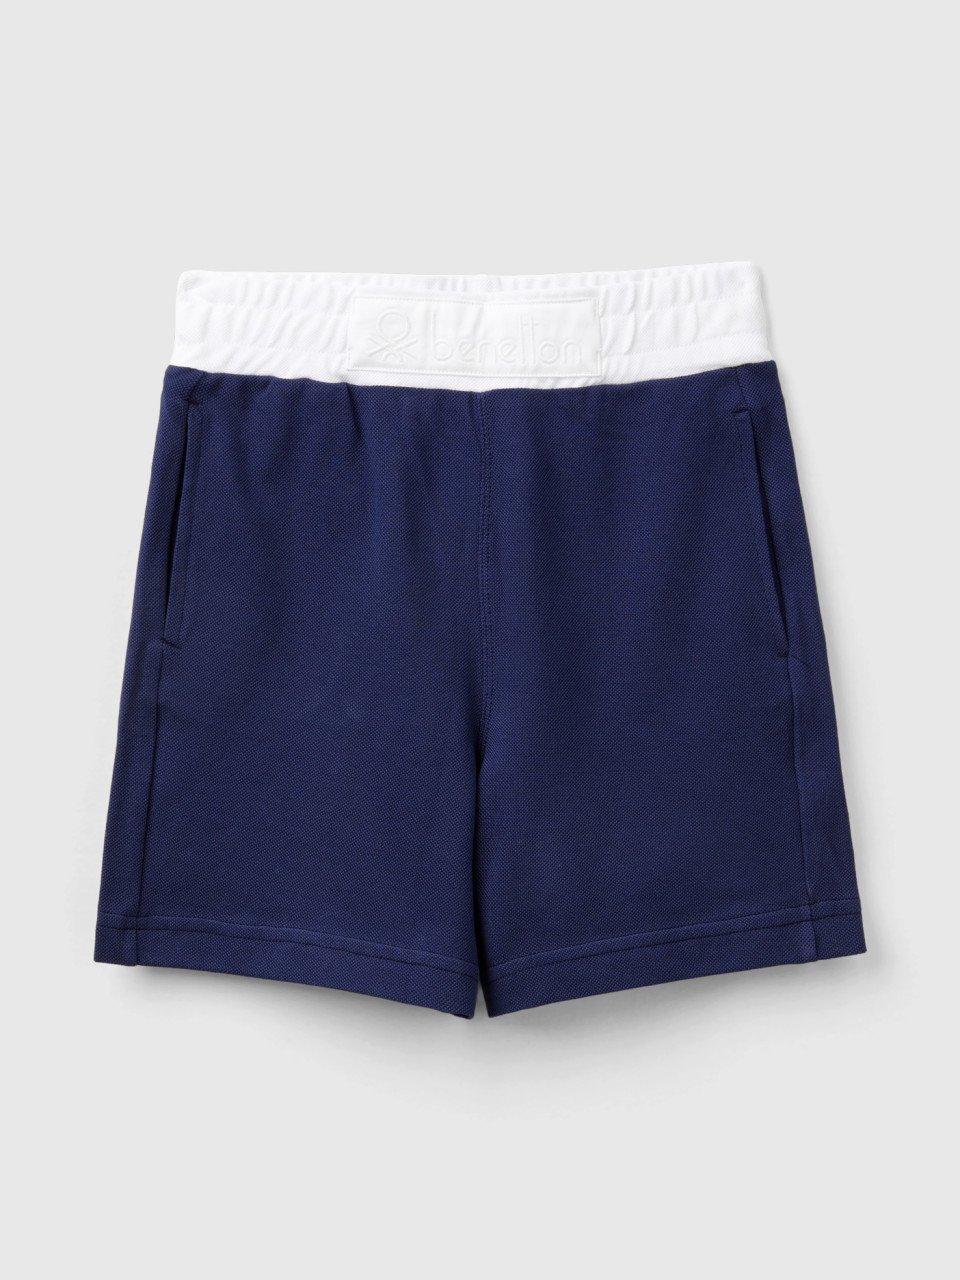 Benetton, Organic Cotton Shorts, Dark Blue, Kids